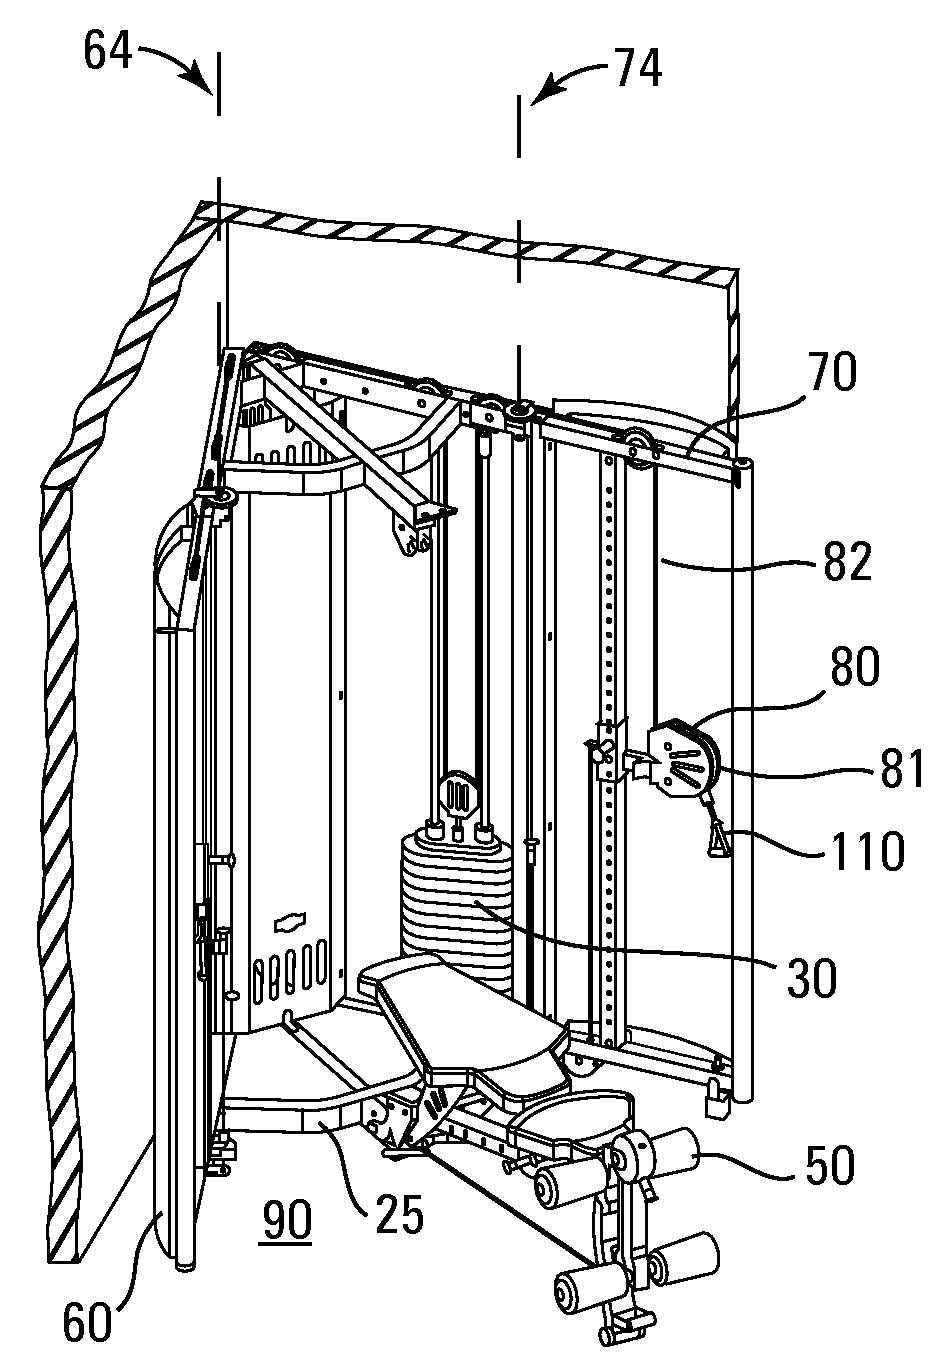 Freestanding exercise apparatus